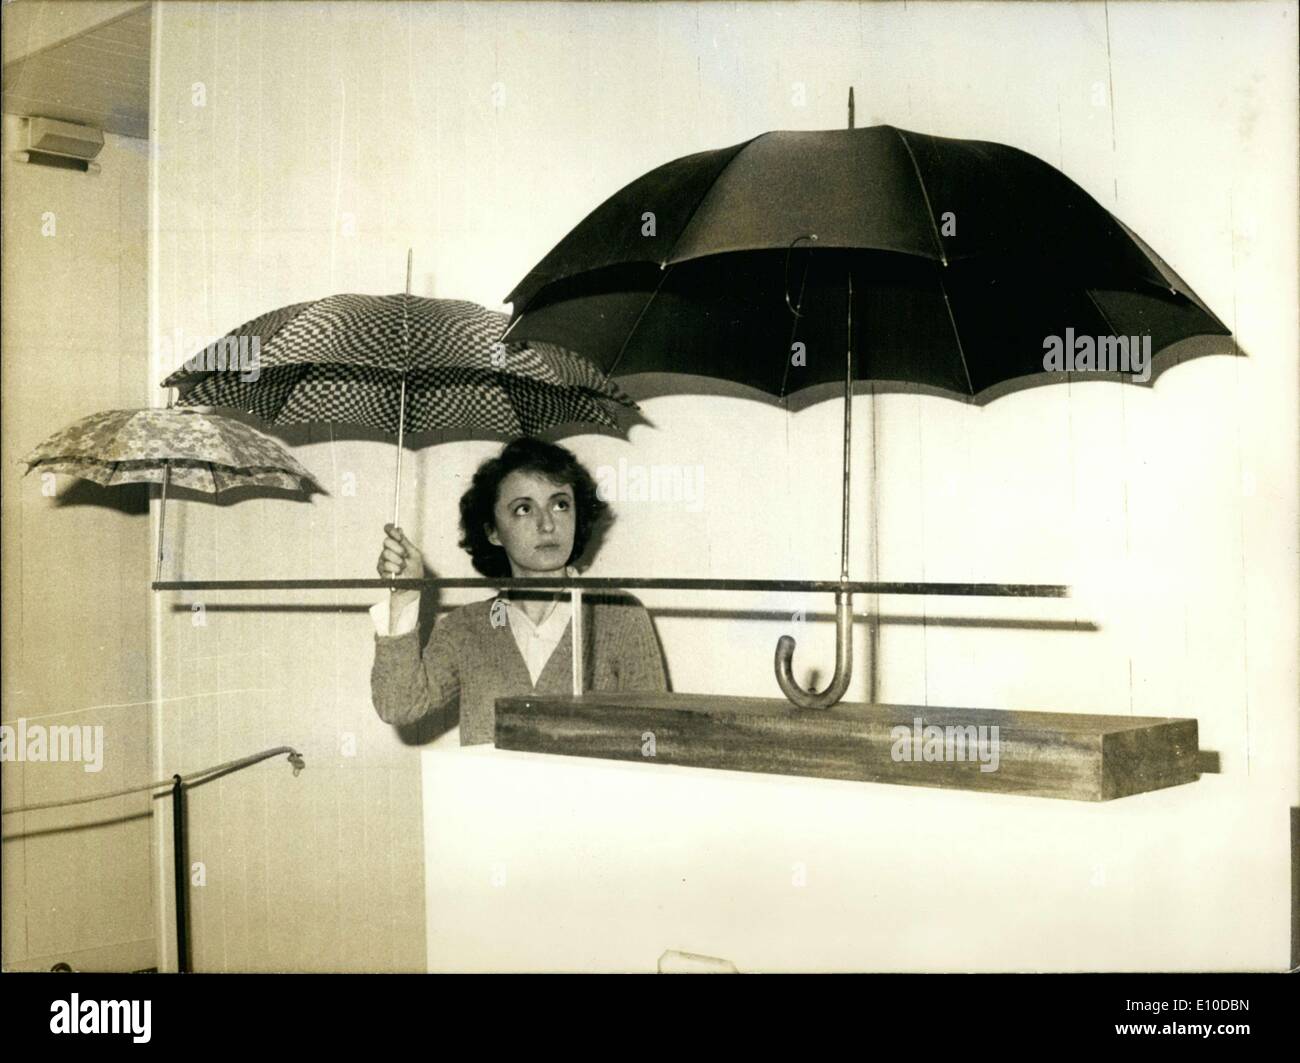 Benötigen 28. April 1972 - eine humorvolle Familie Regenschirm-Lösung? Stockfoto